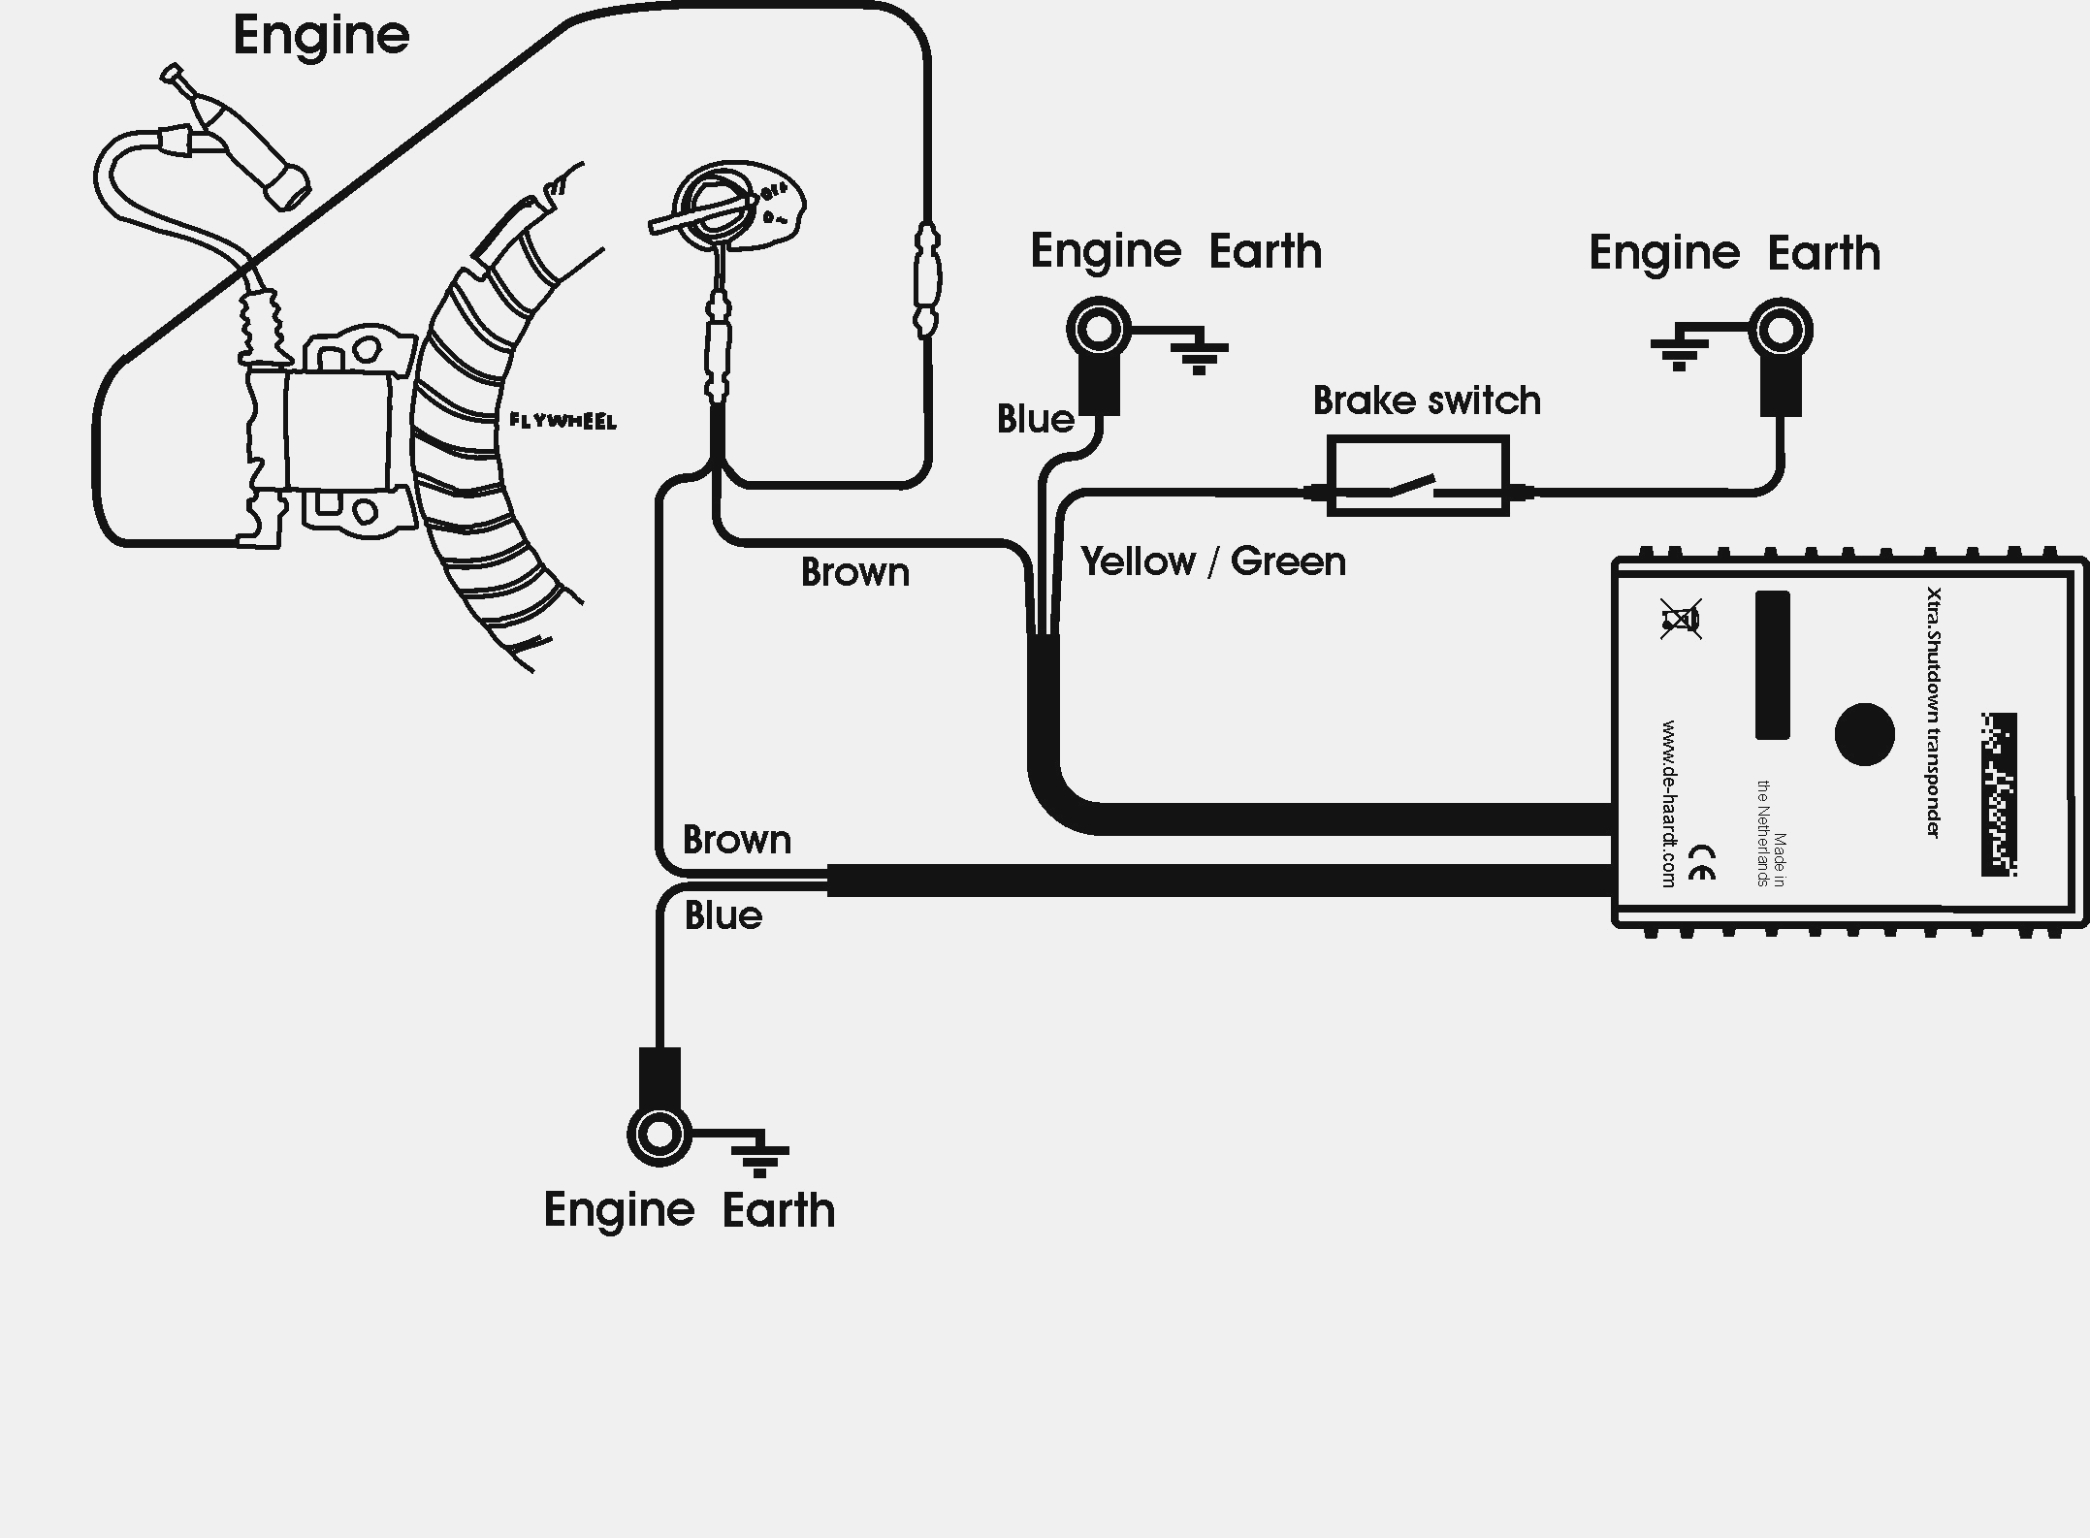 Wiring Diagram For Honda Gx390 Engine | Wiring Diagram - Honda Gx390 Wiring Diagram